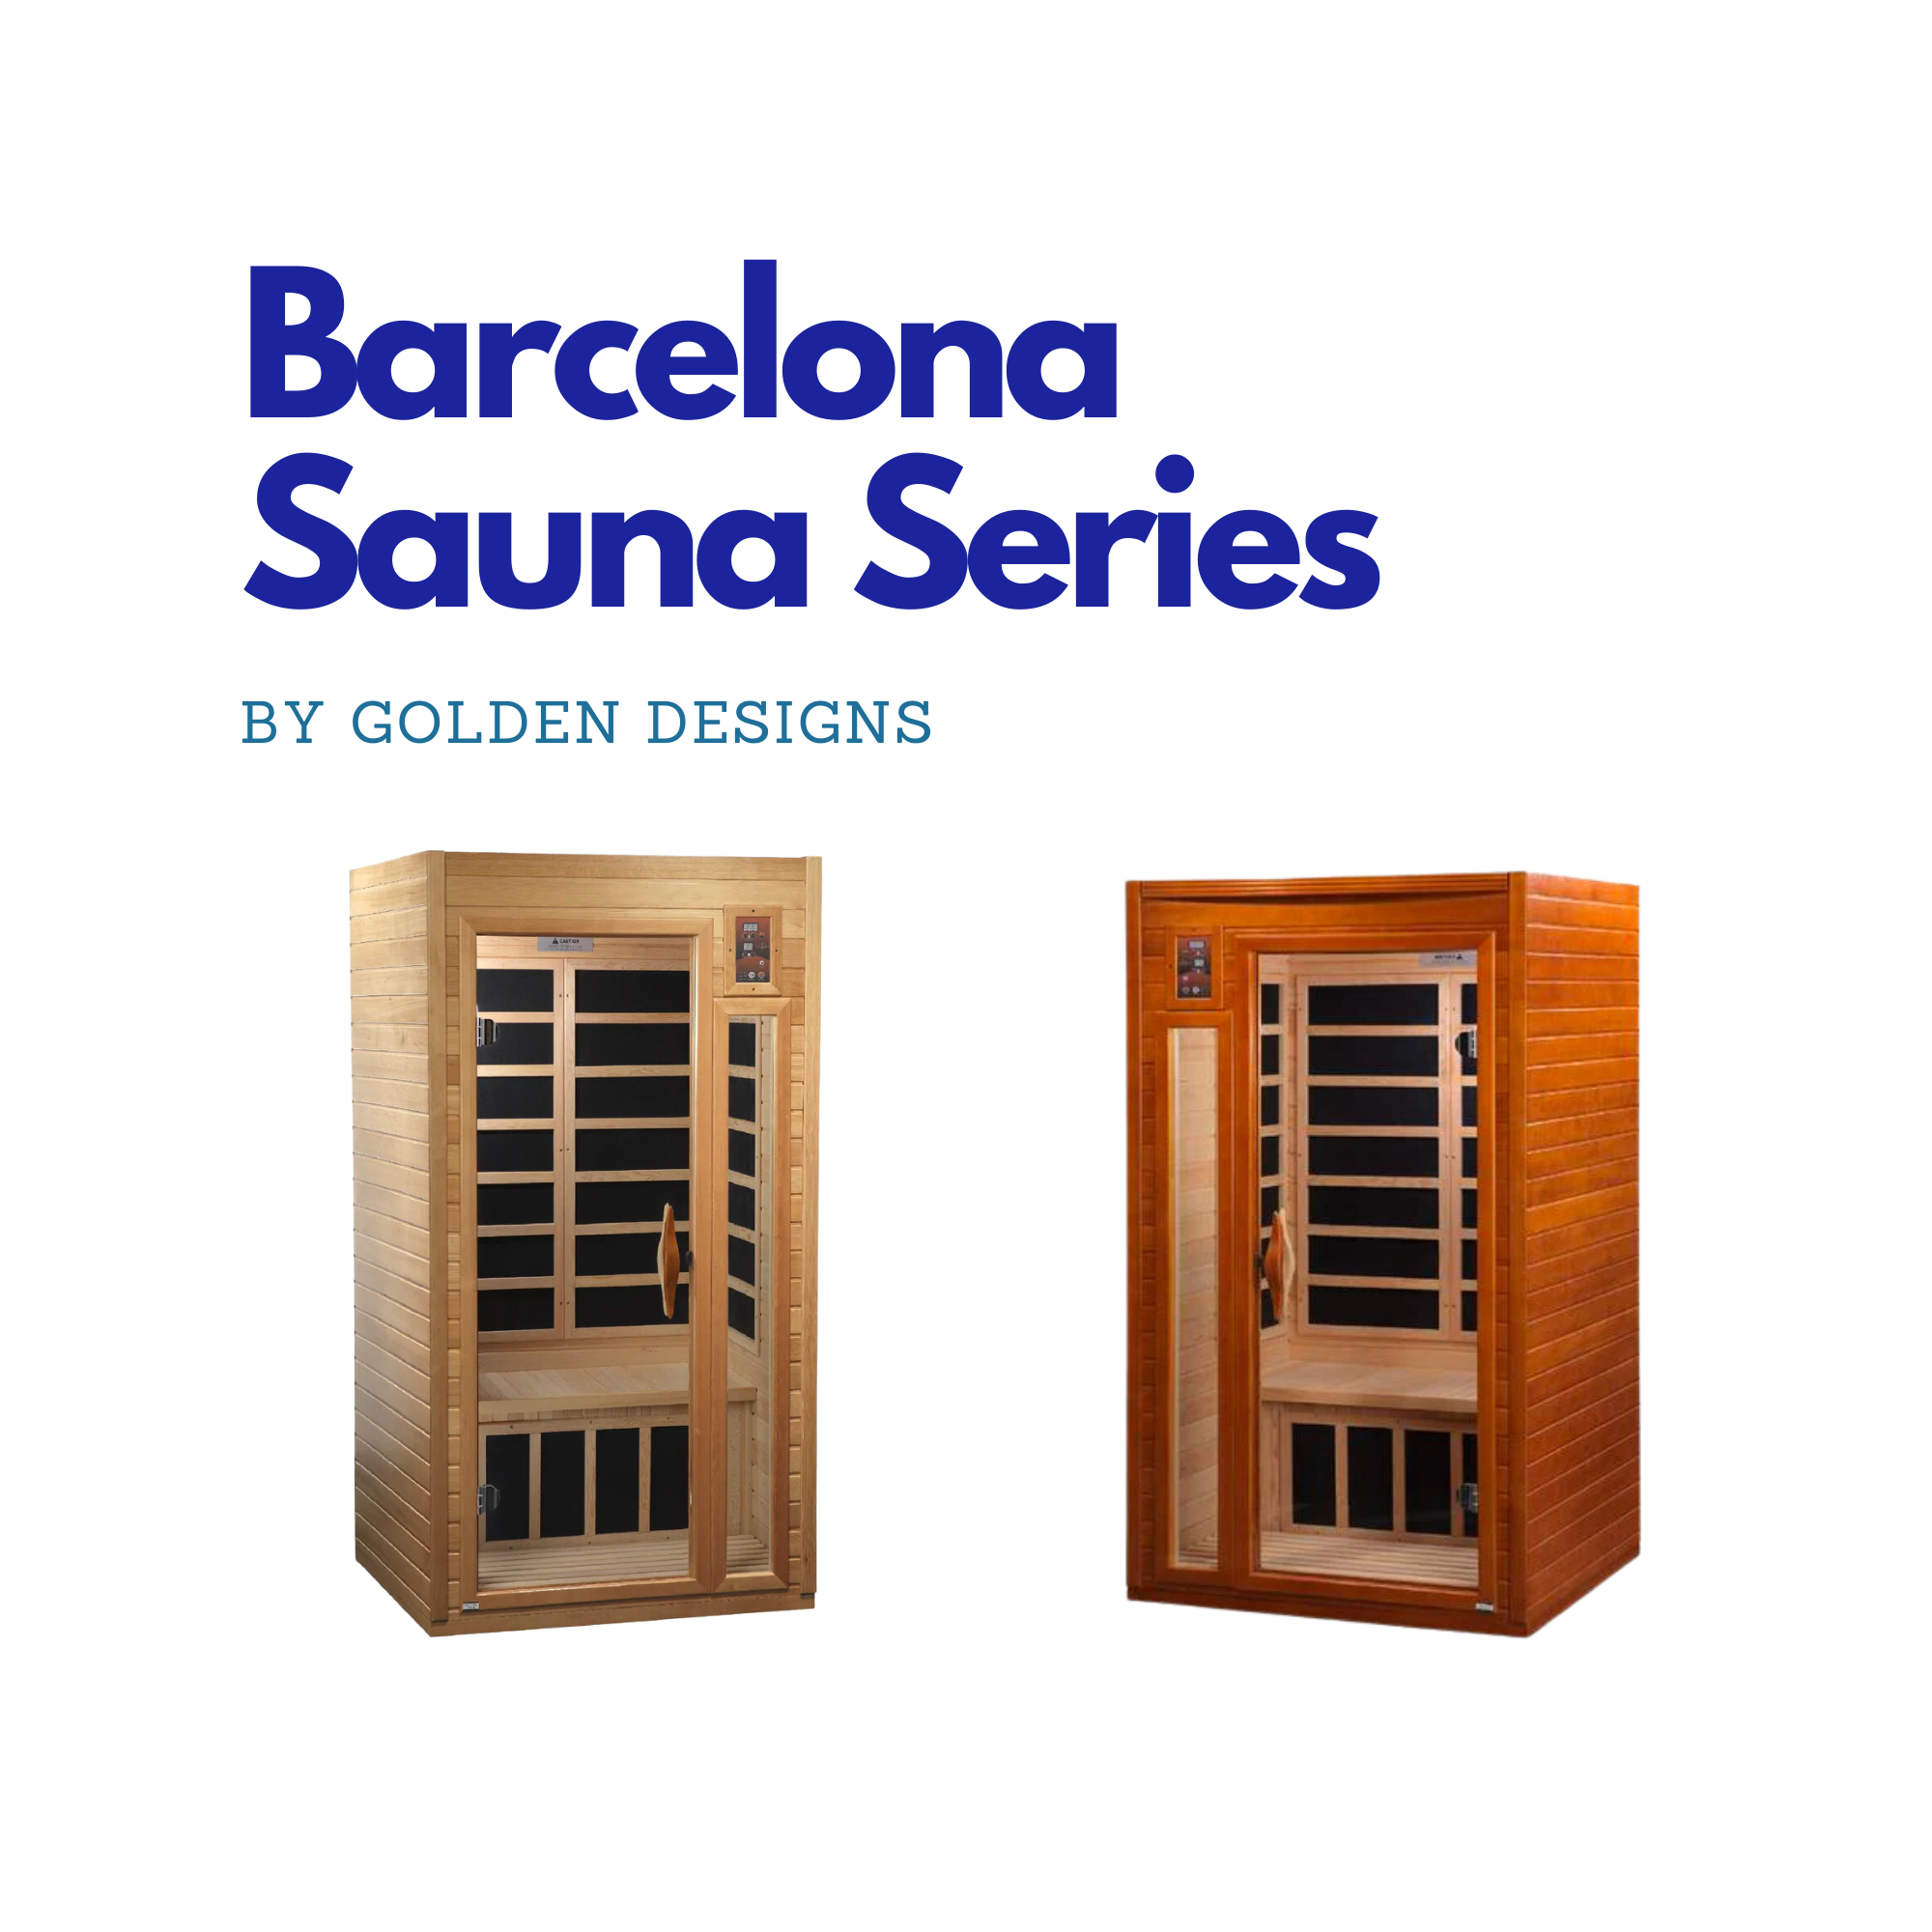 Barcelona Saunas by Golden Designs